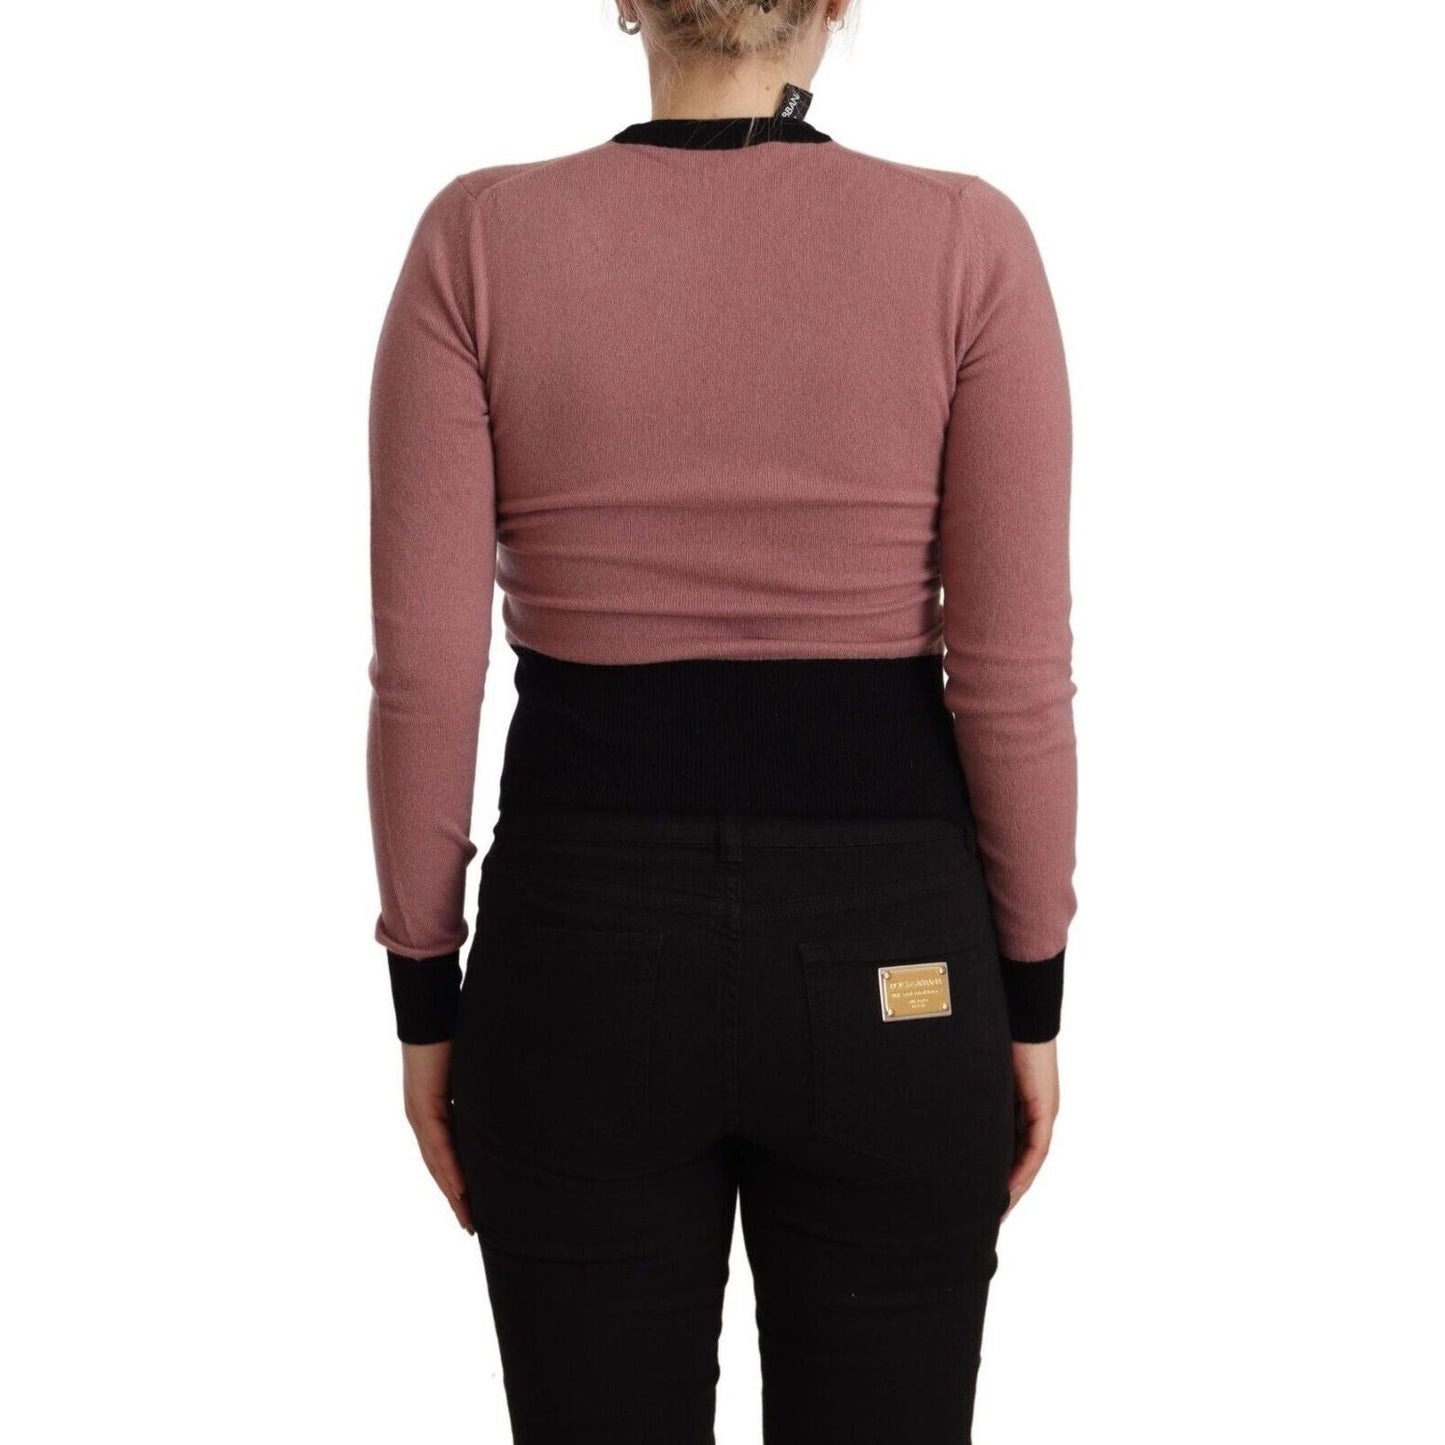 Dolce & Gabbana Elegant Pink Cashmere Crewneck Sweater WOMAN SWEATERS pink-cashmere-crewneck-sartoria-pullover-sweater